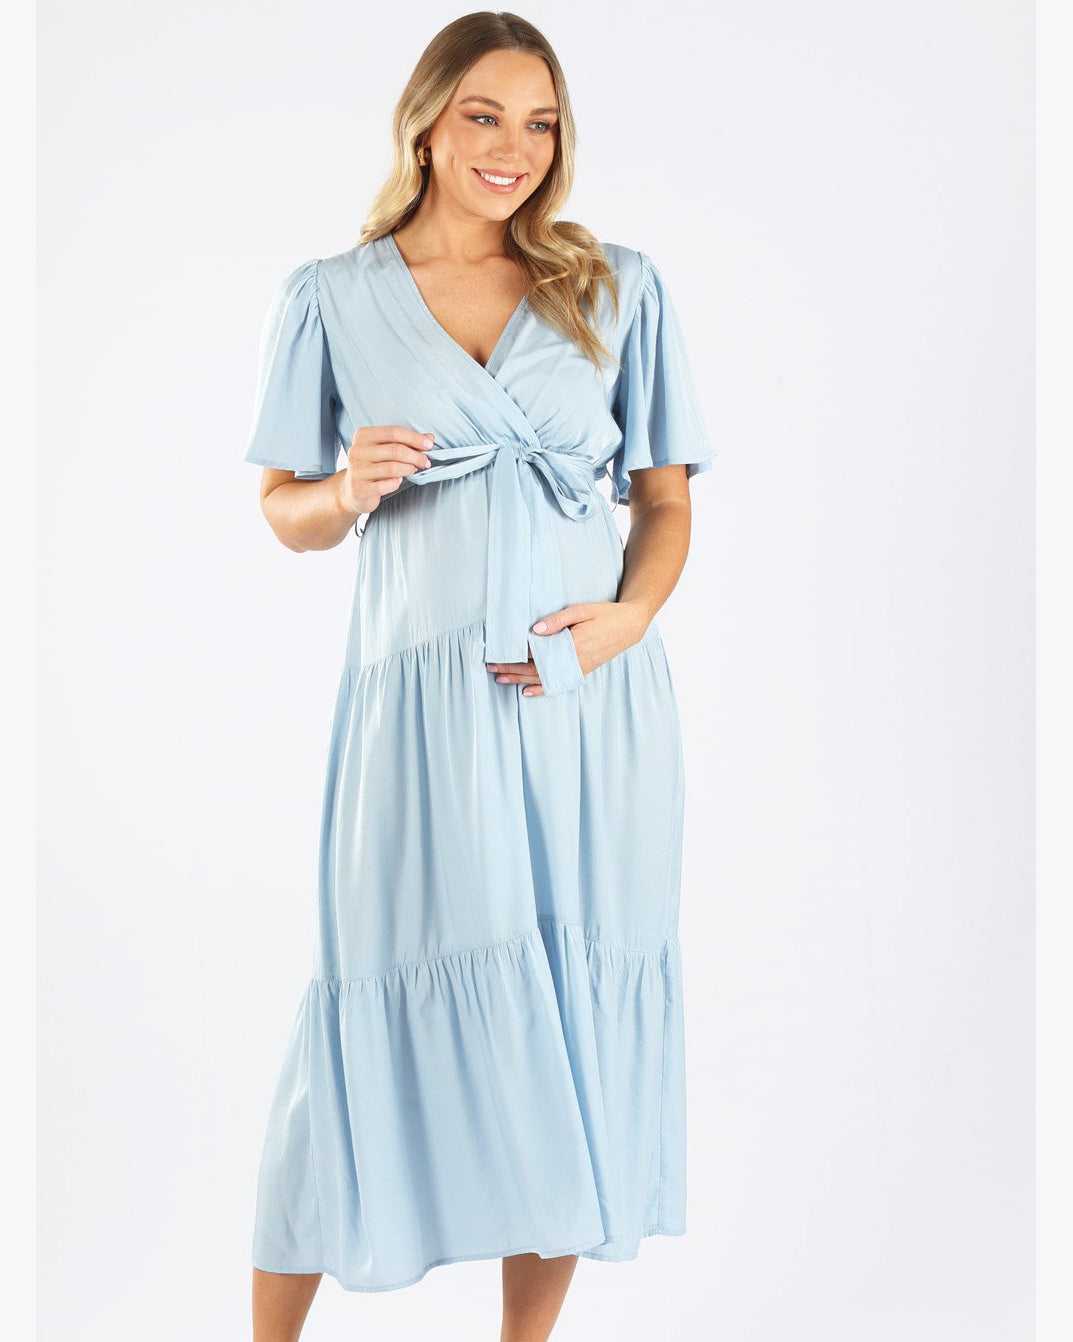 Cara Maternity Dress - Light Blue